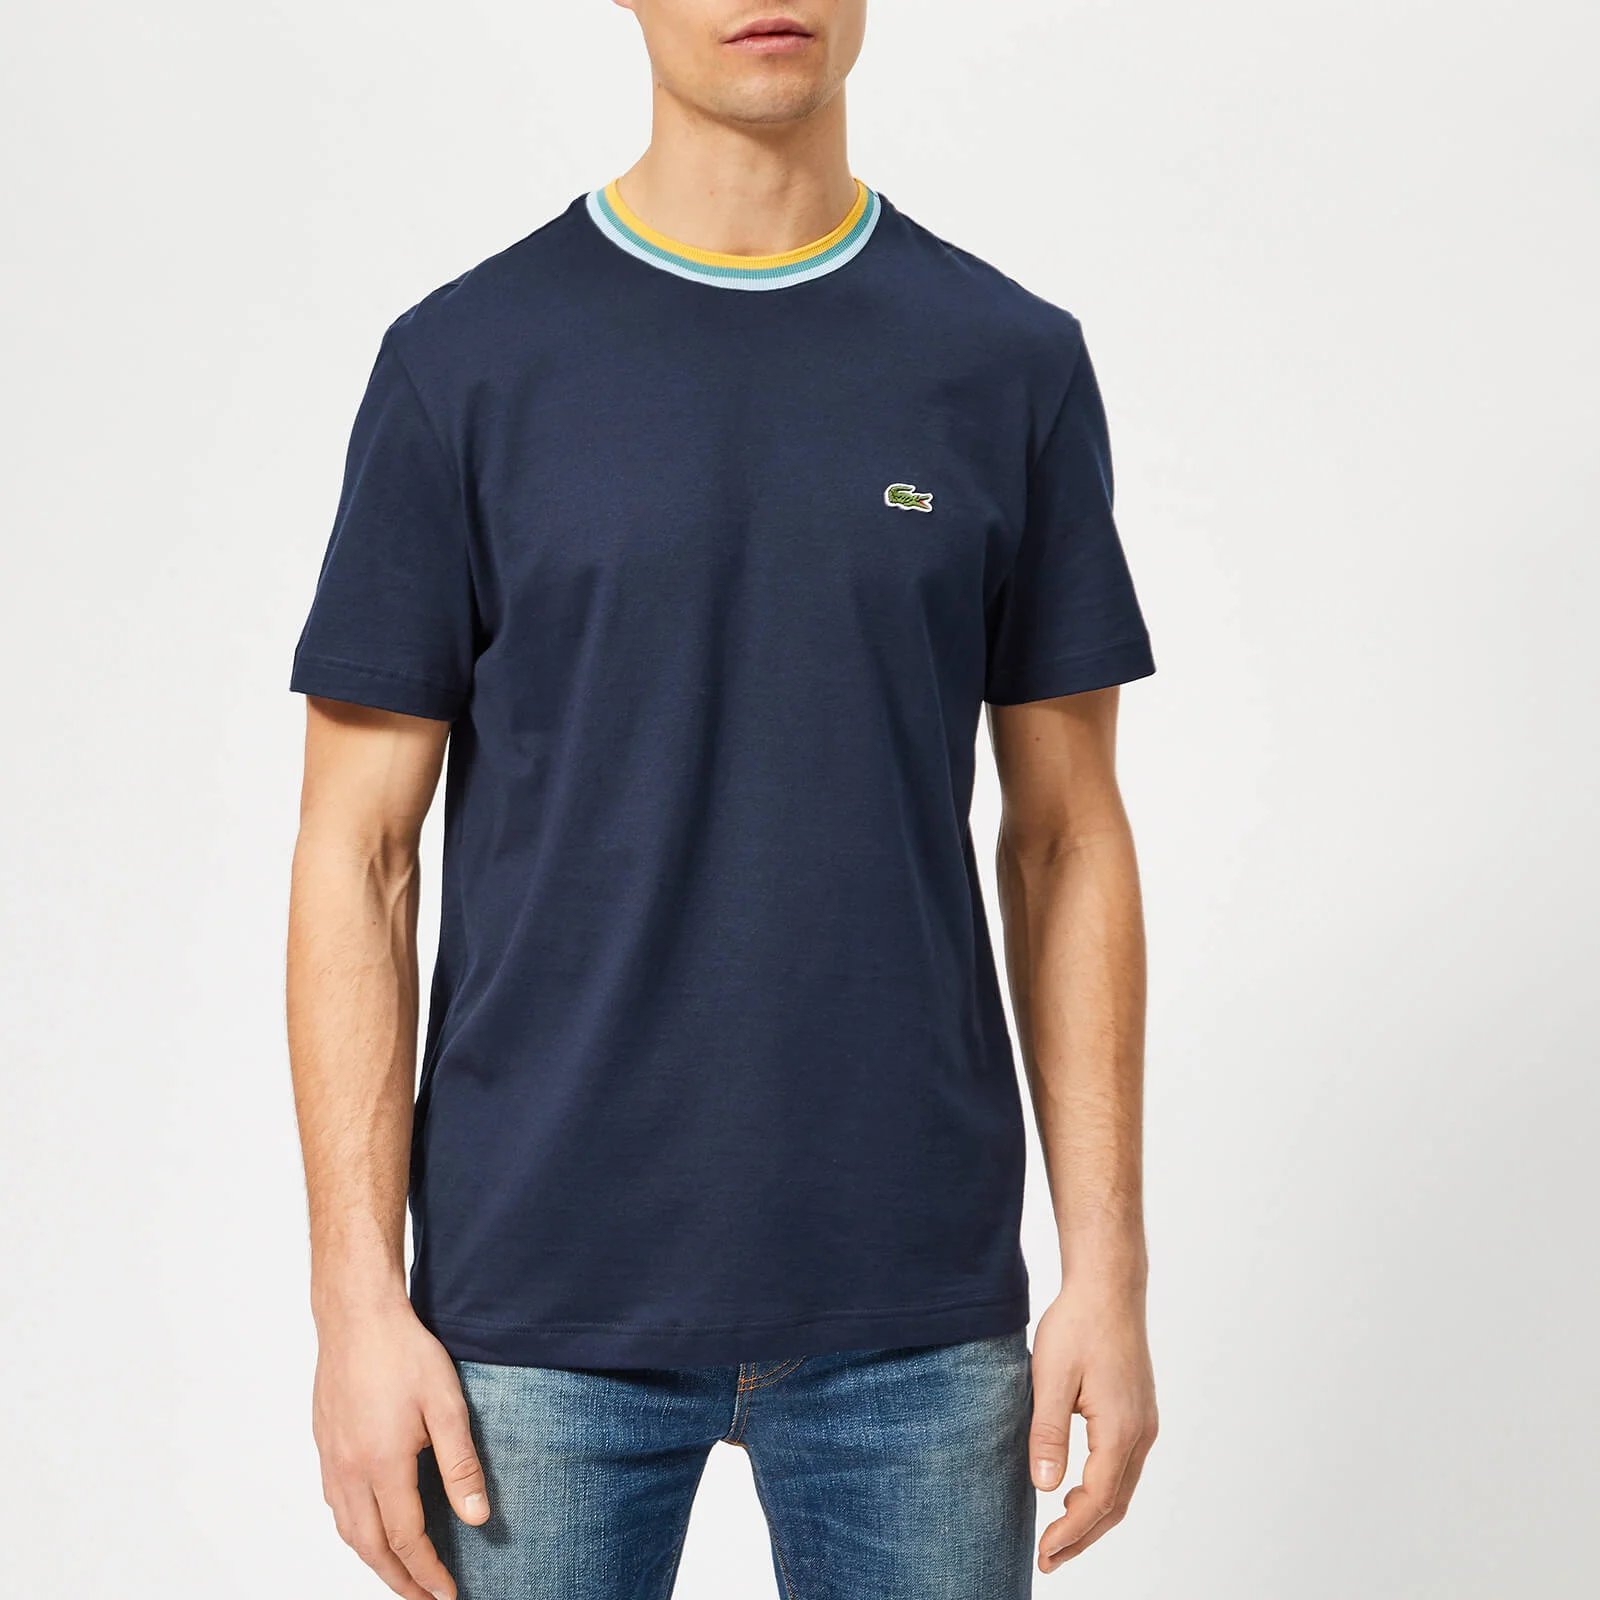 Lacoste Men's Contrast Collar T-Shirt - Navy Image 1